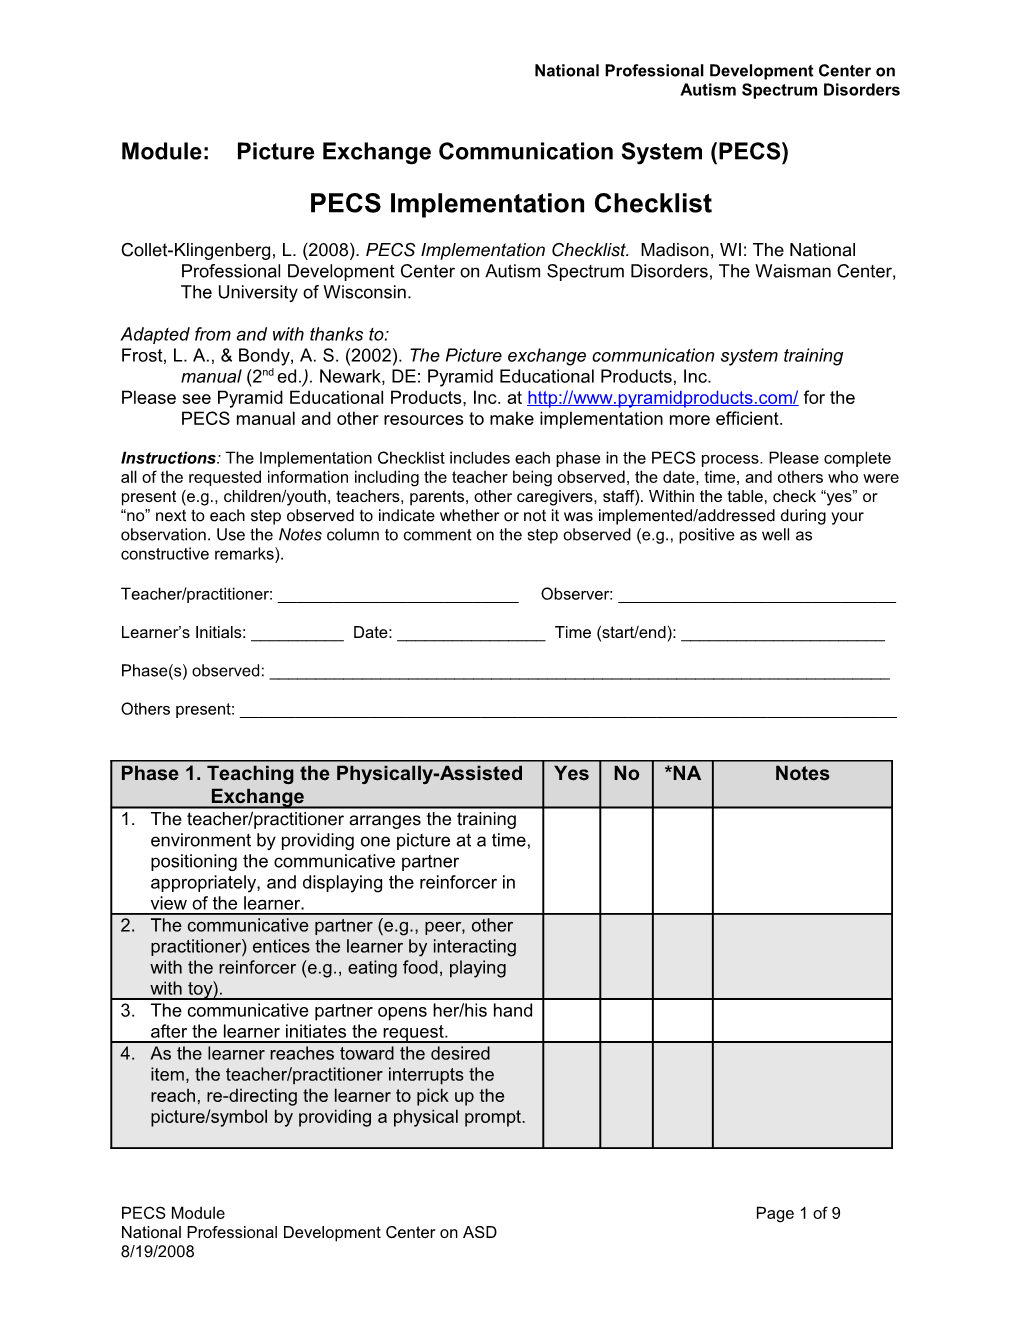 Implementation Checklist for PECS